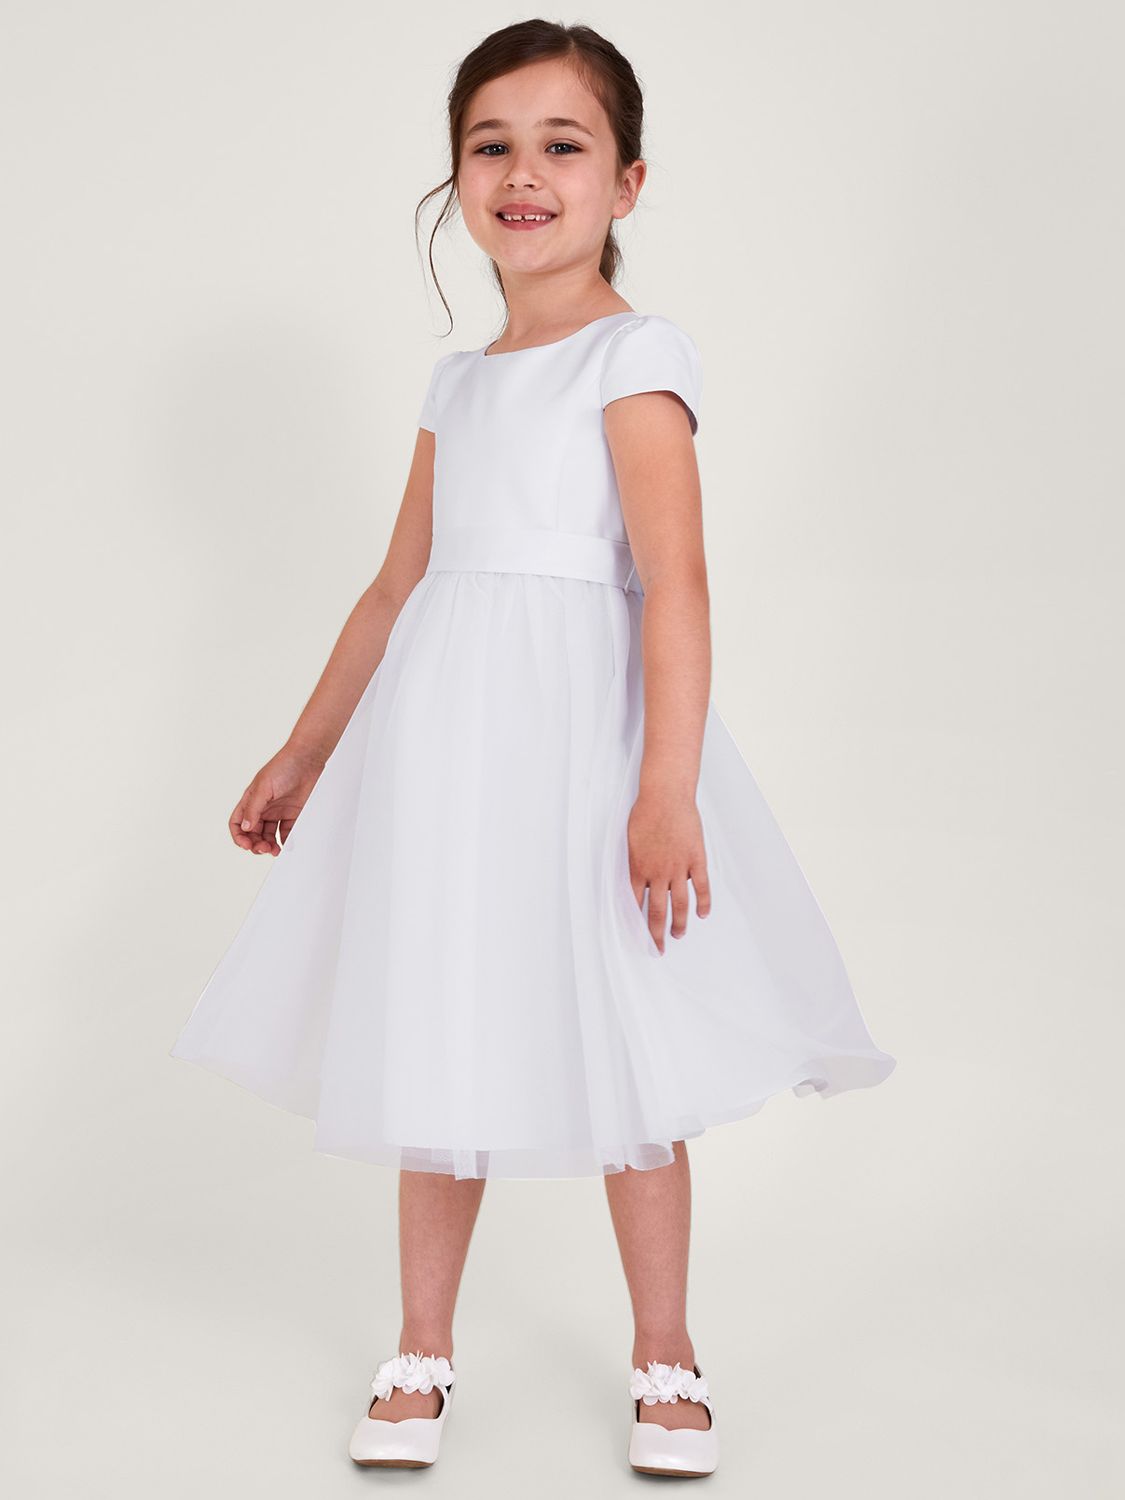 Monsoon Kids' Tulle Communion Dress, White, 3 years